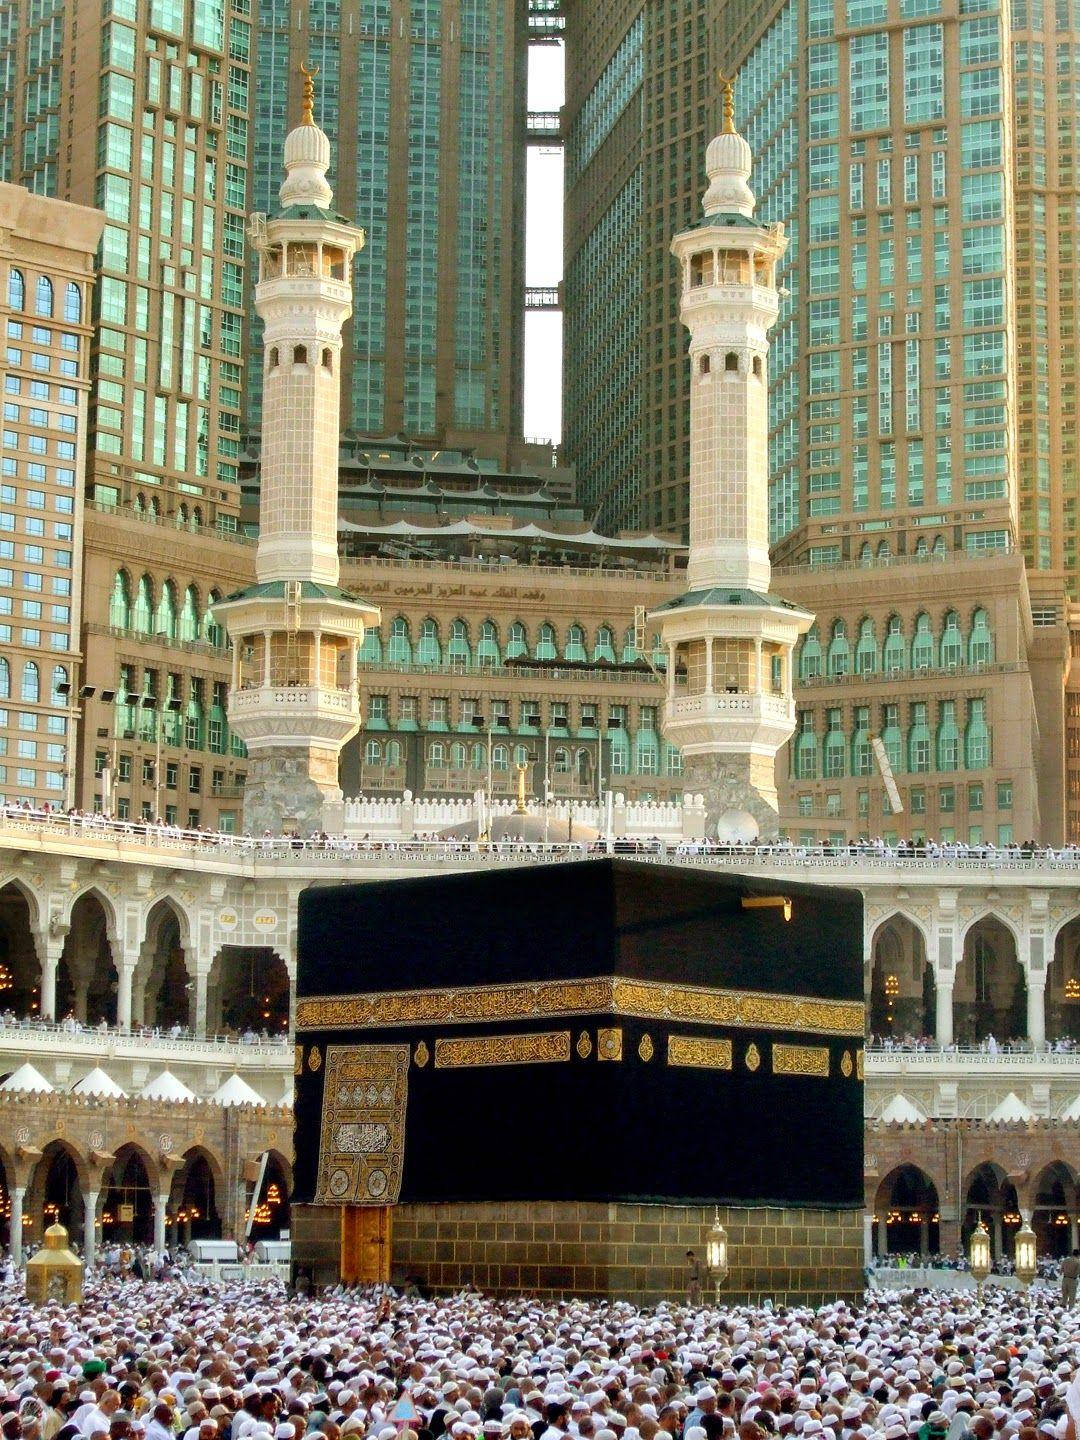 Tapetav Den Heliga Kaaba Helgedom I Makkah I Hd. Wallpaper